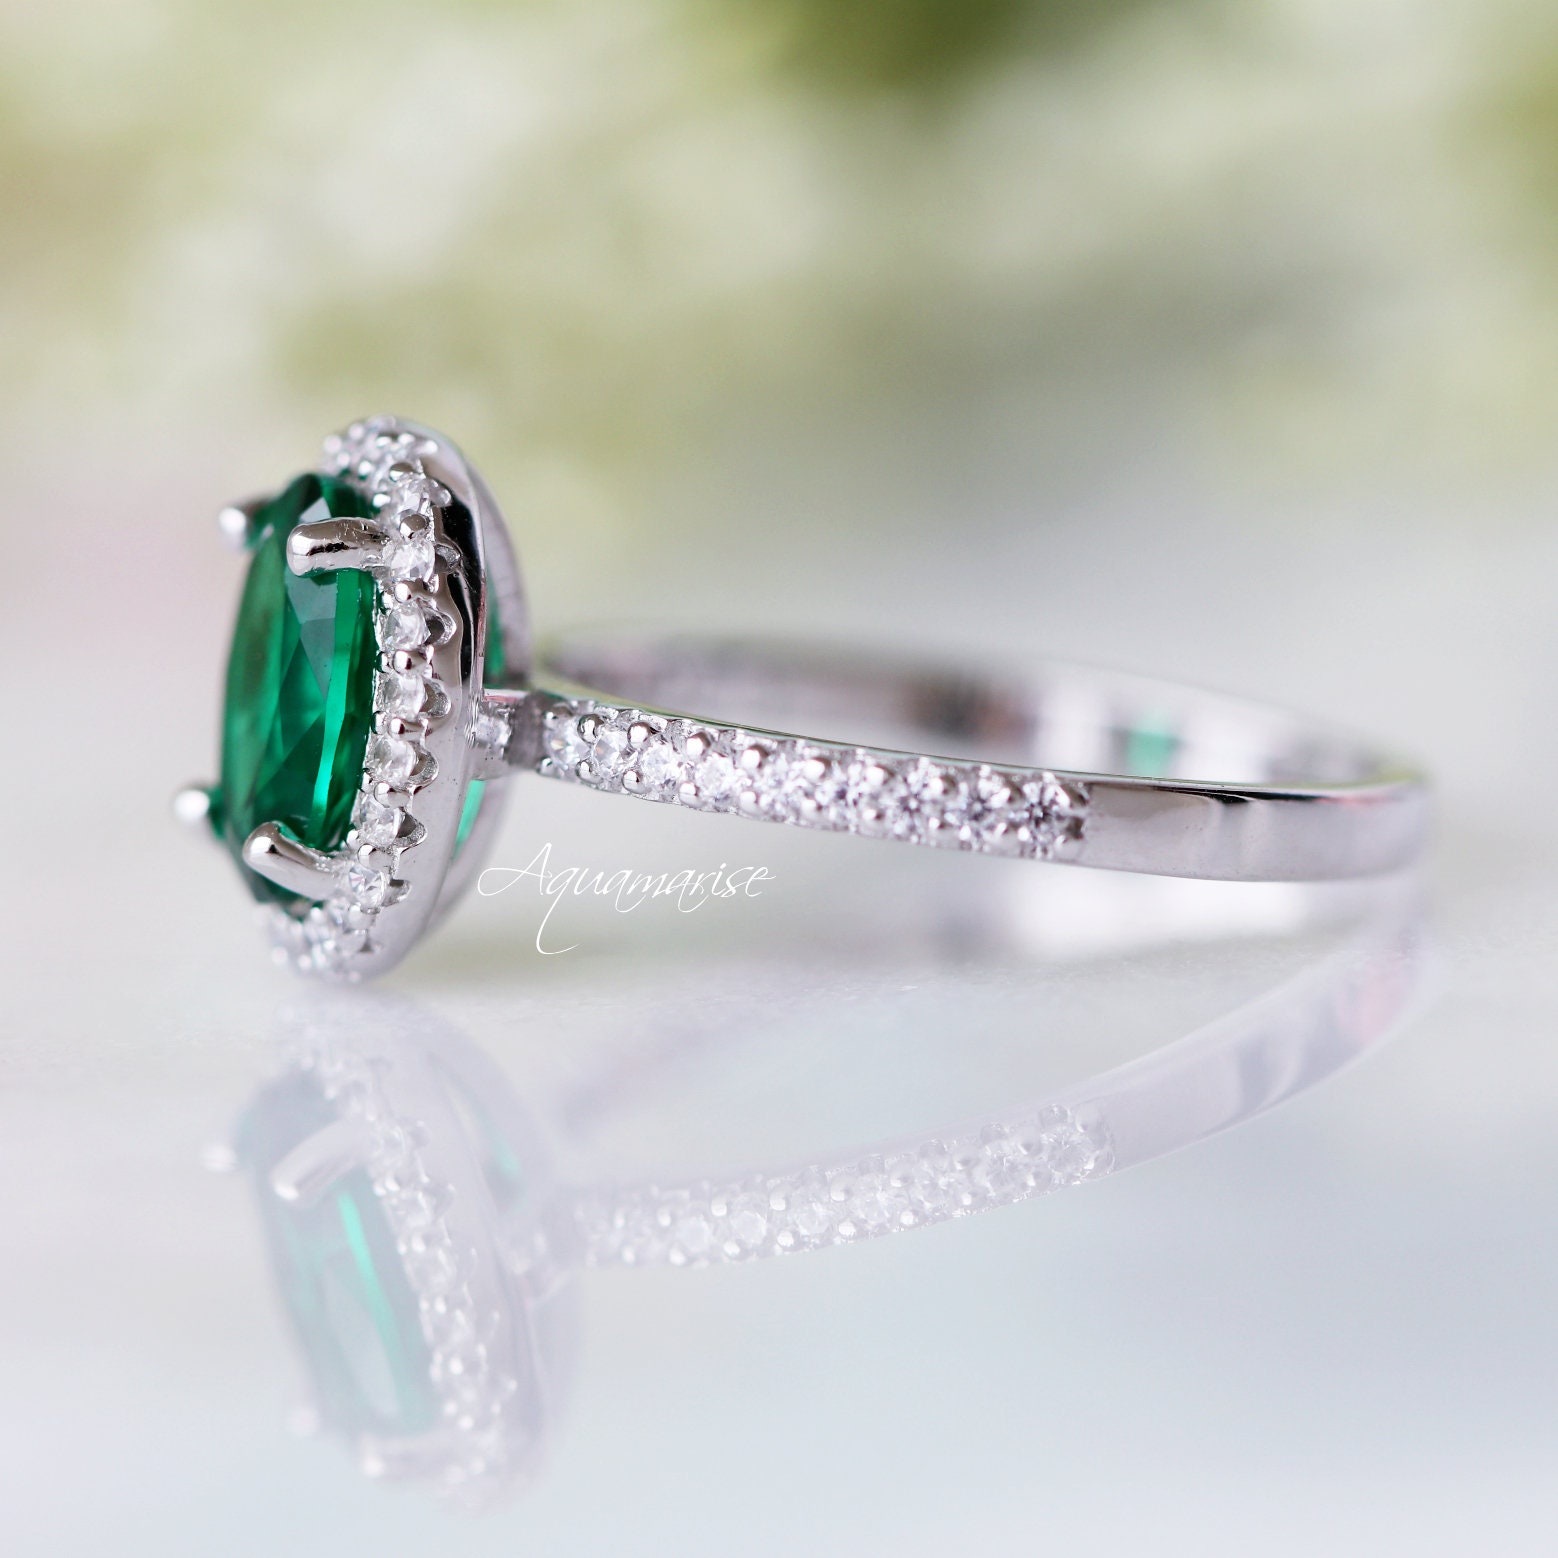 Oval Emerald Ring Sterling Silver Ring Green Gemstone | Etsy